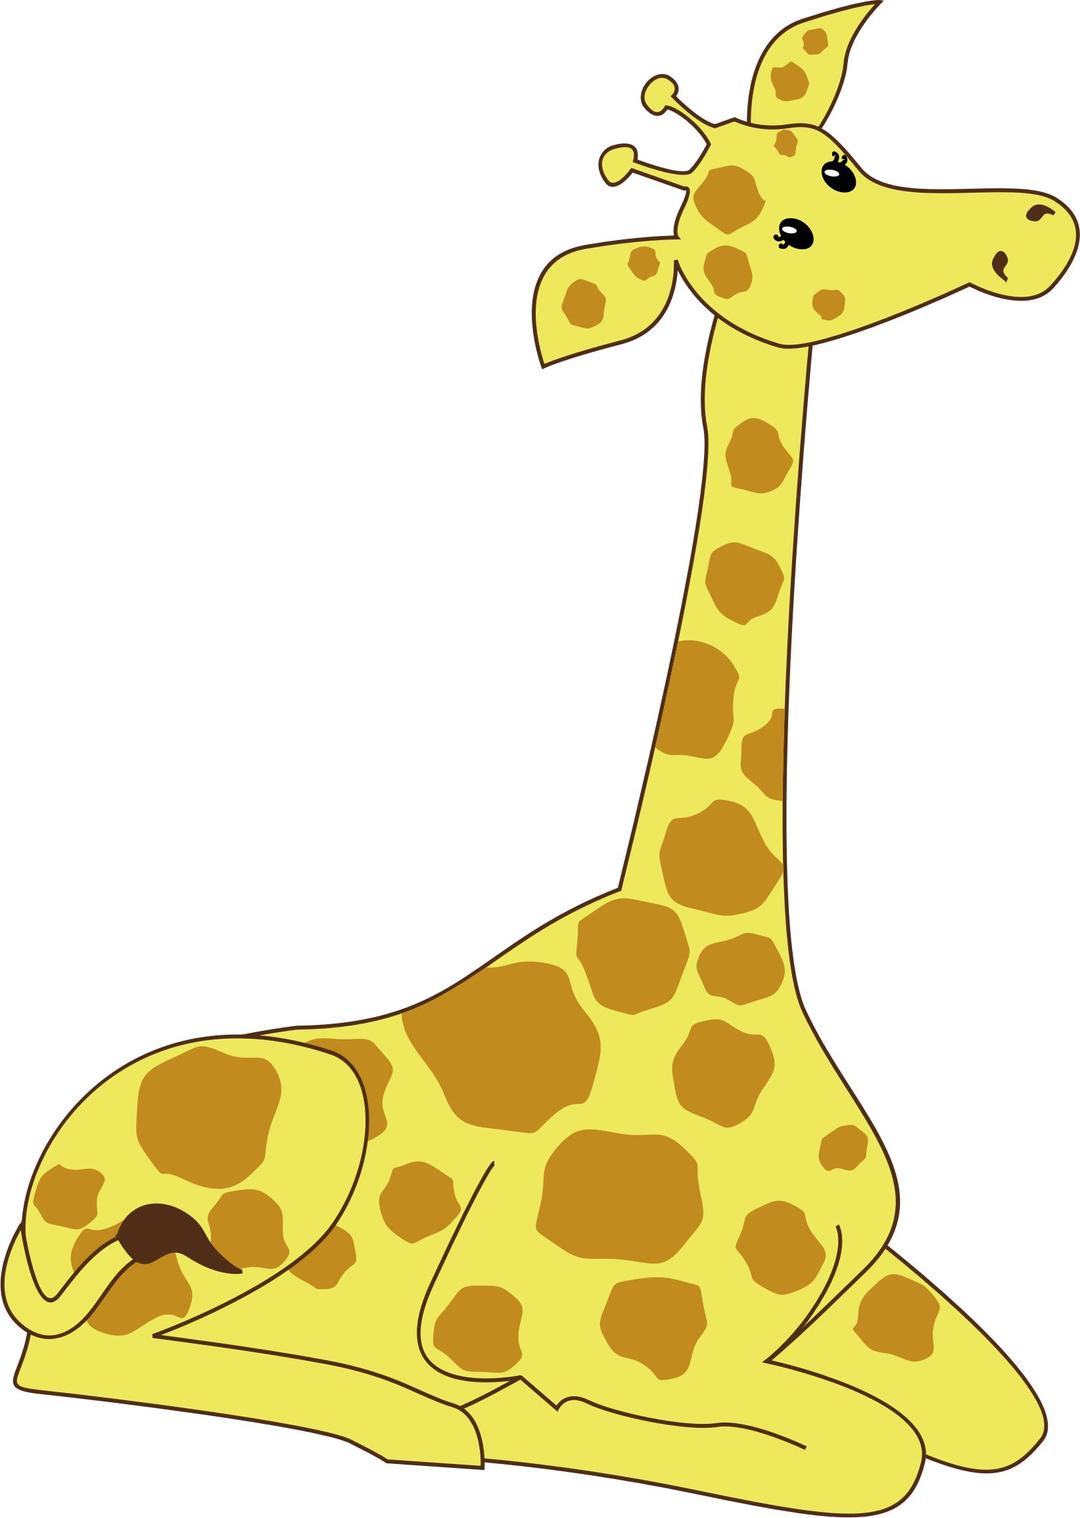 Kneeling Cartoon Giraffe png transparent